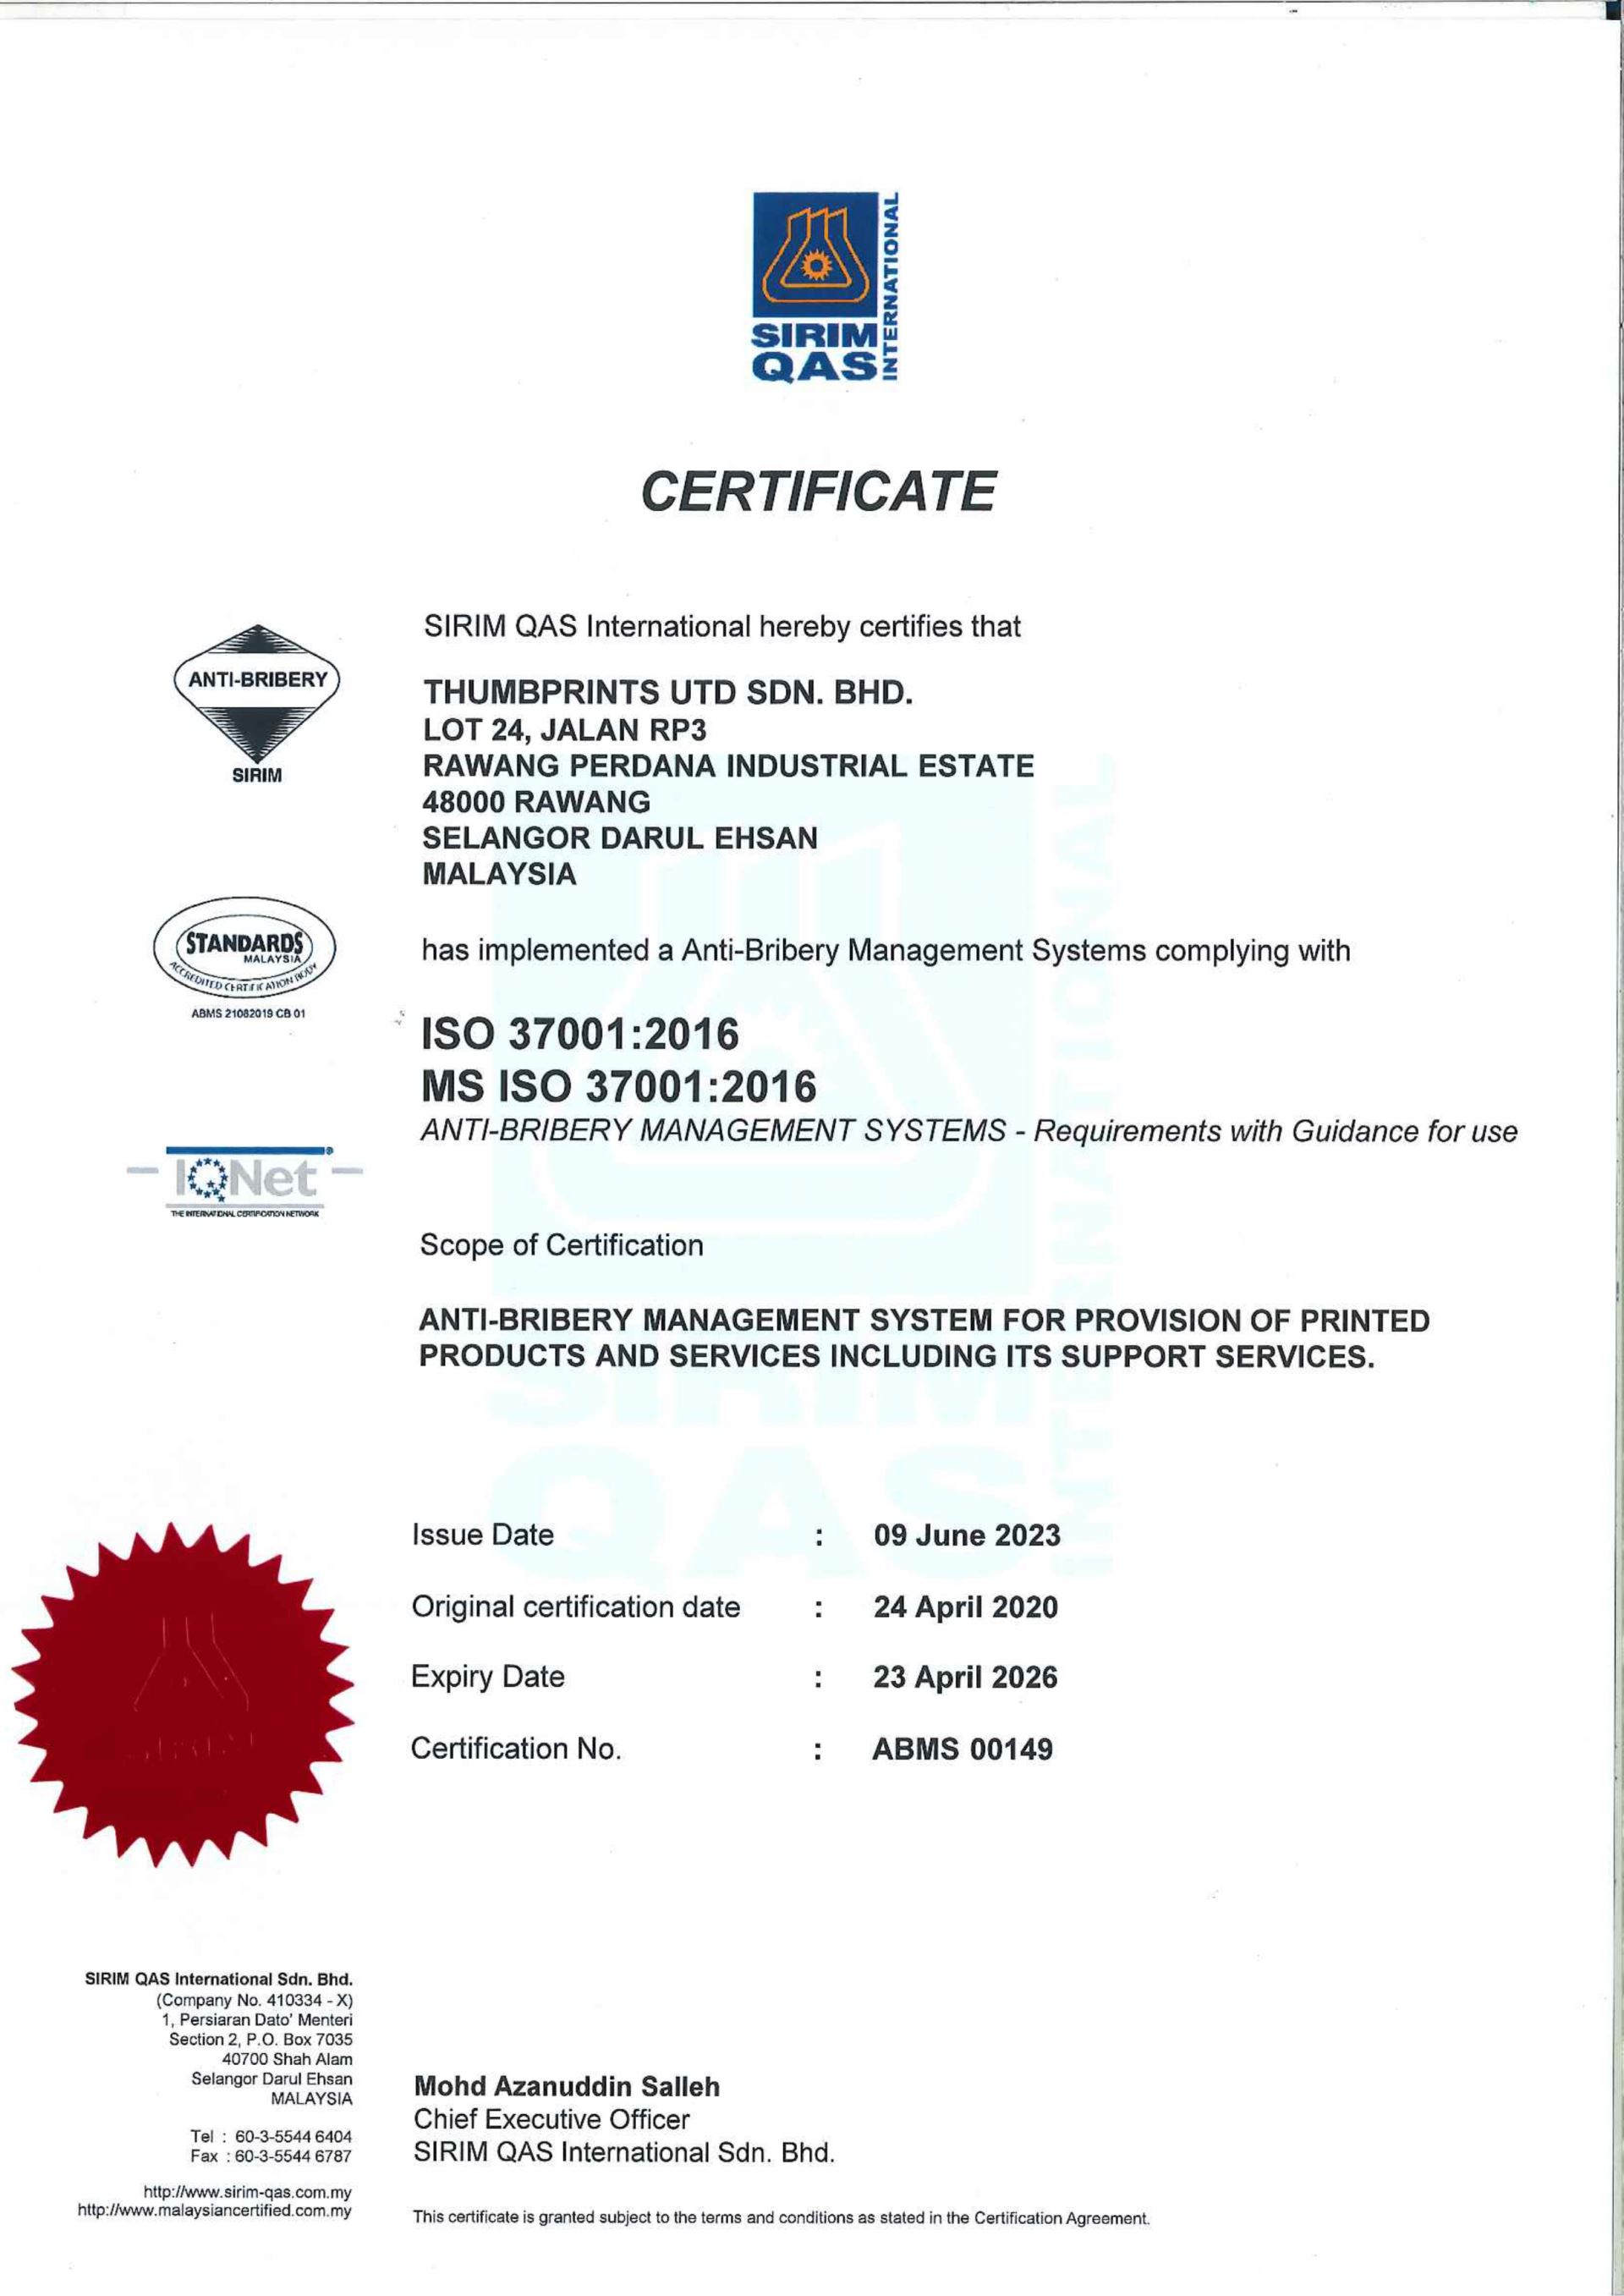 SIRIM ABMS Certification (23 April 2023-23 April 2026)